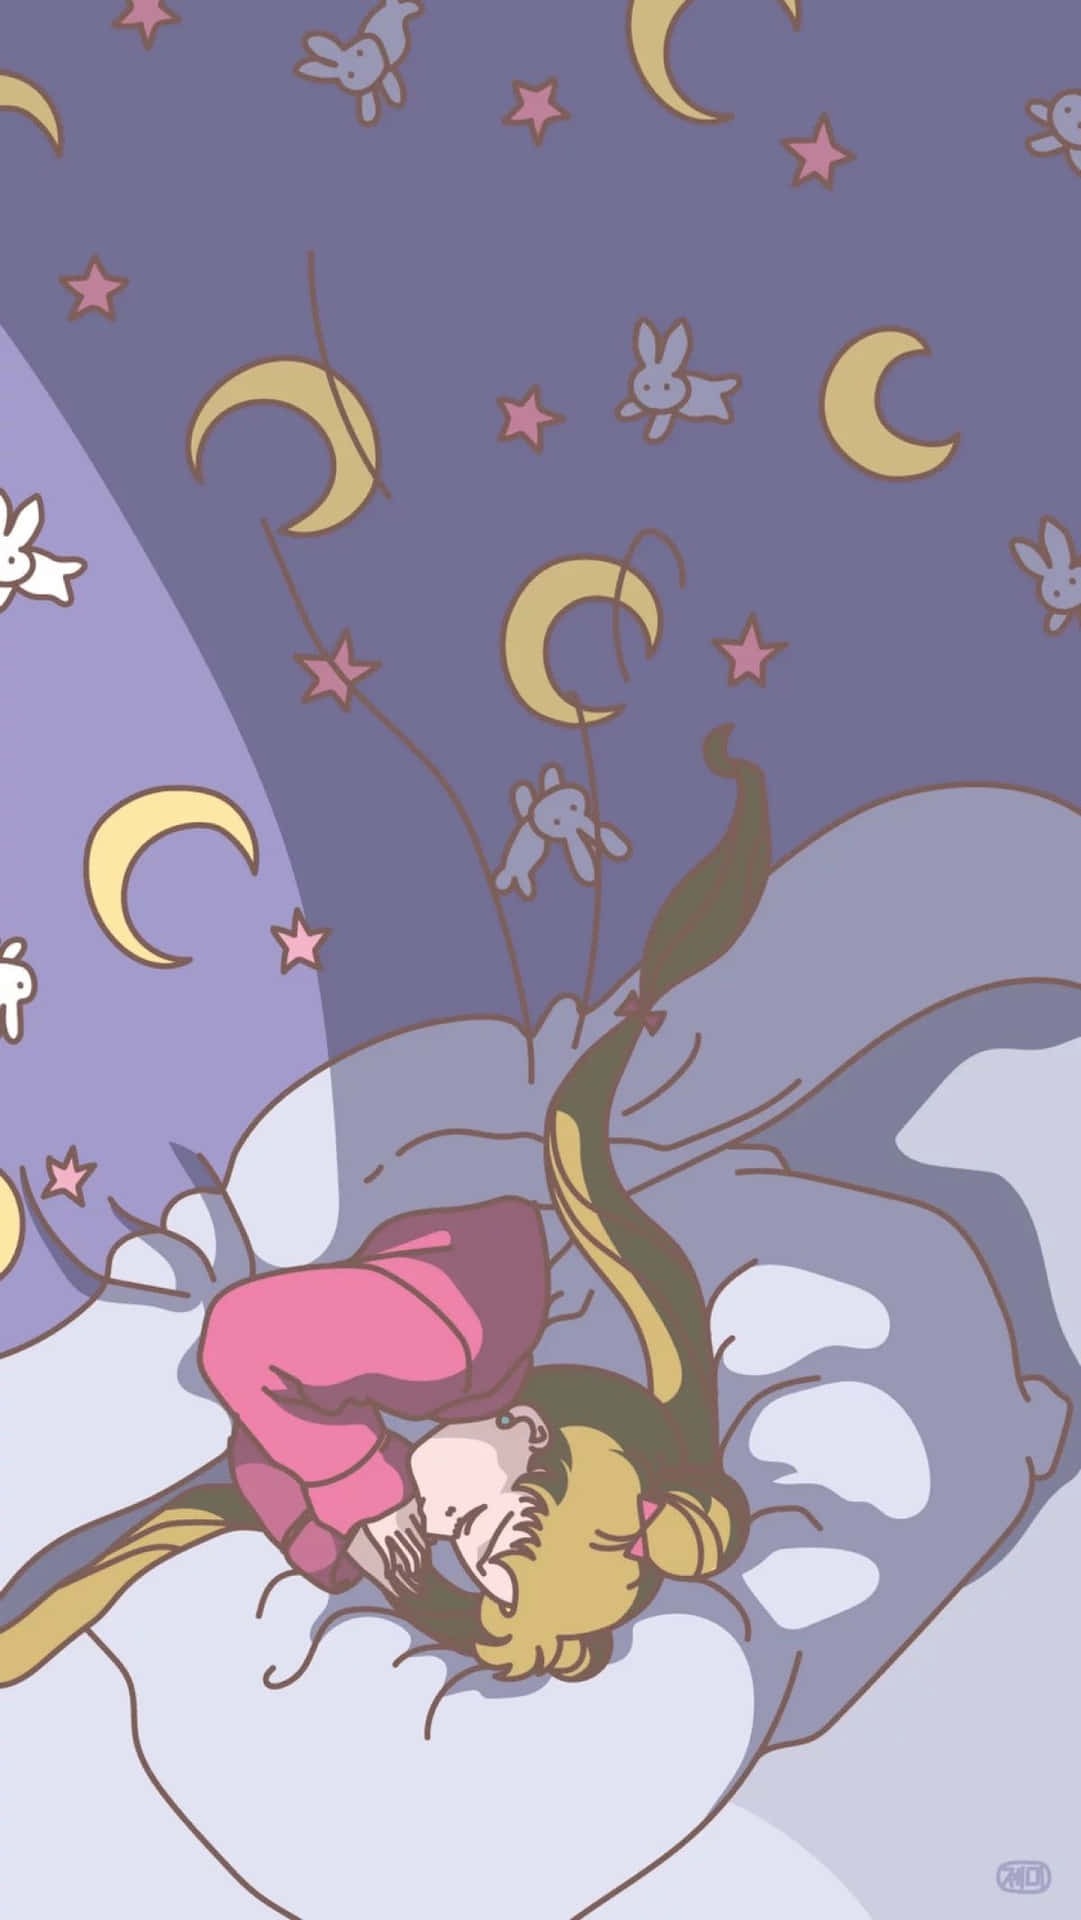 Ästhetischeschlafender Sailor Moon Wallpaper